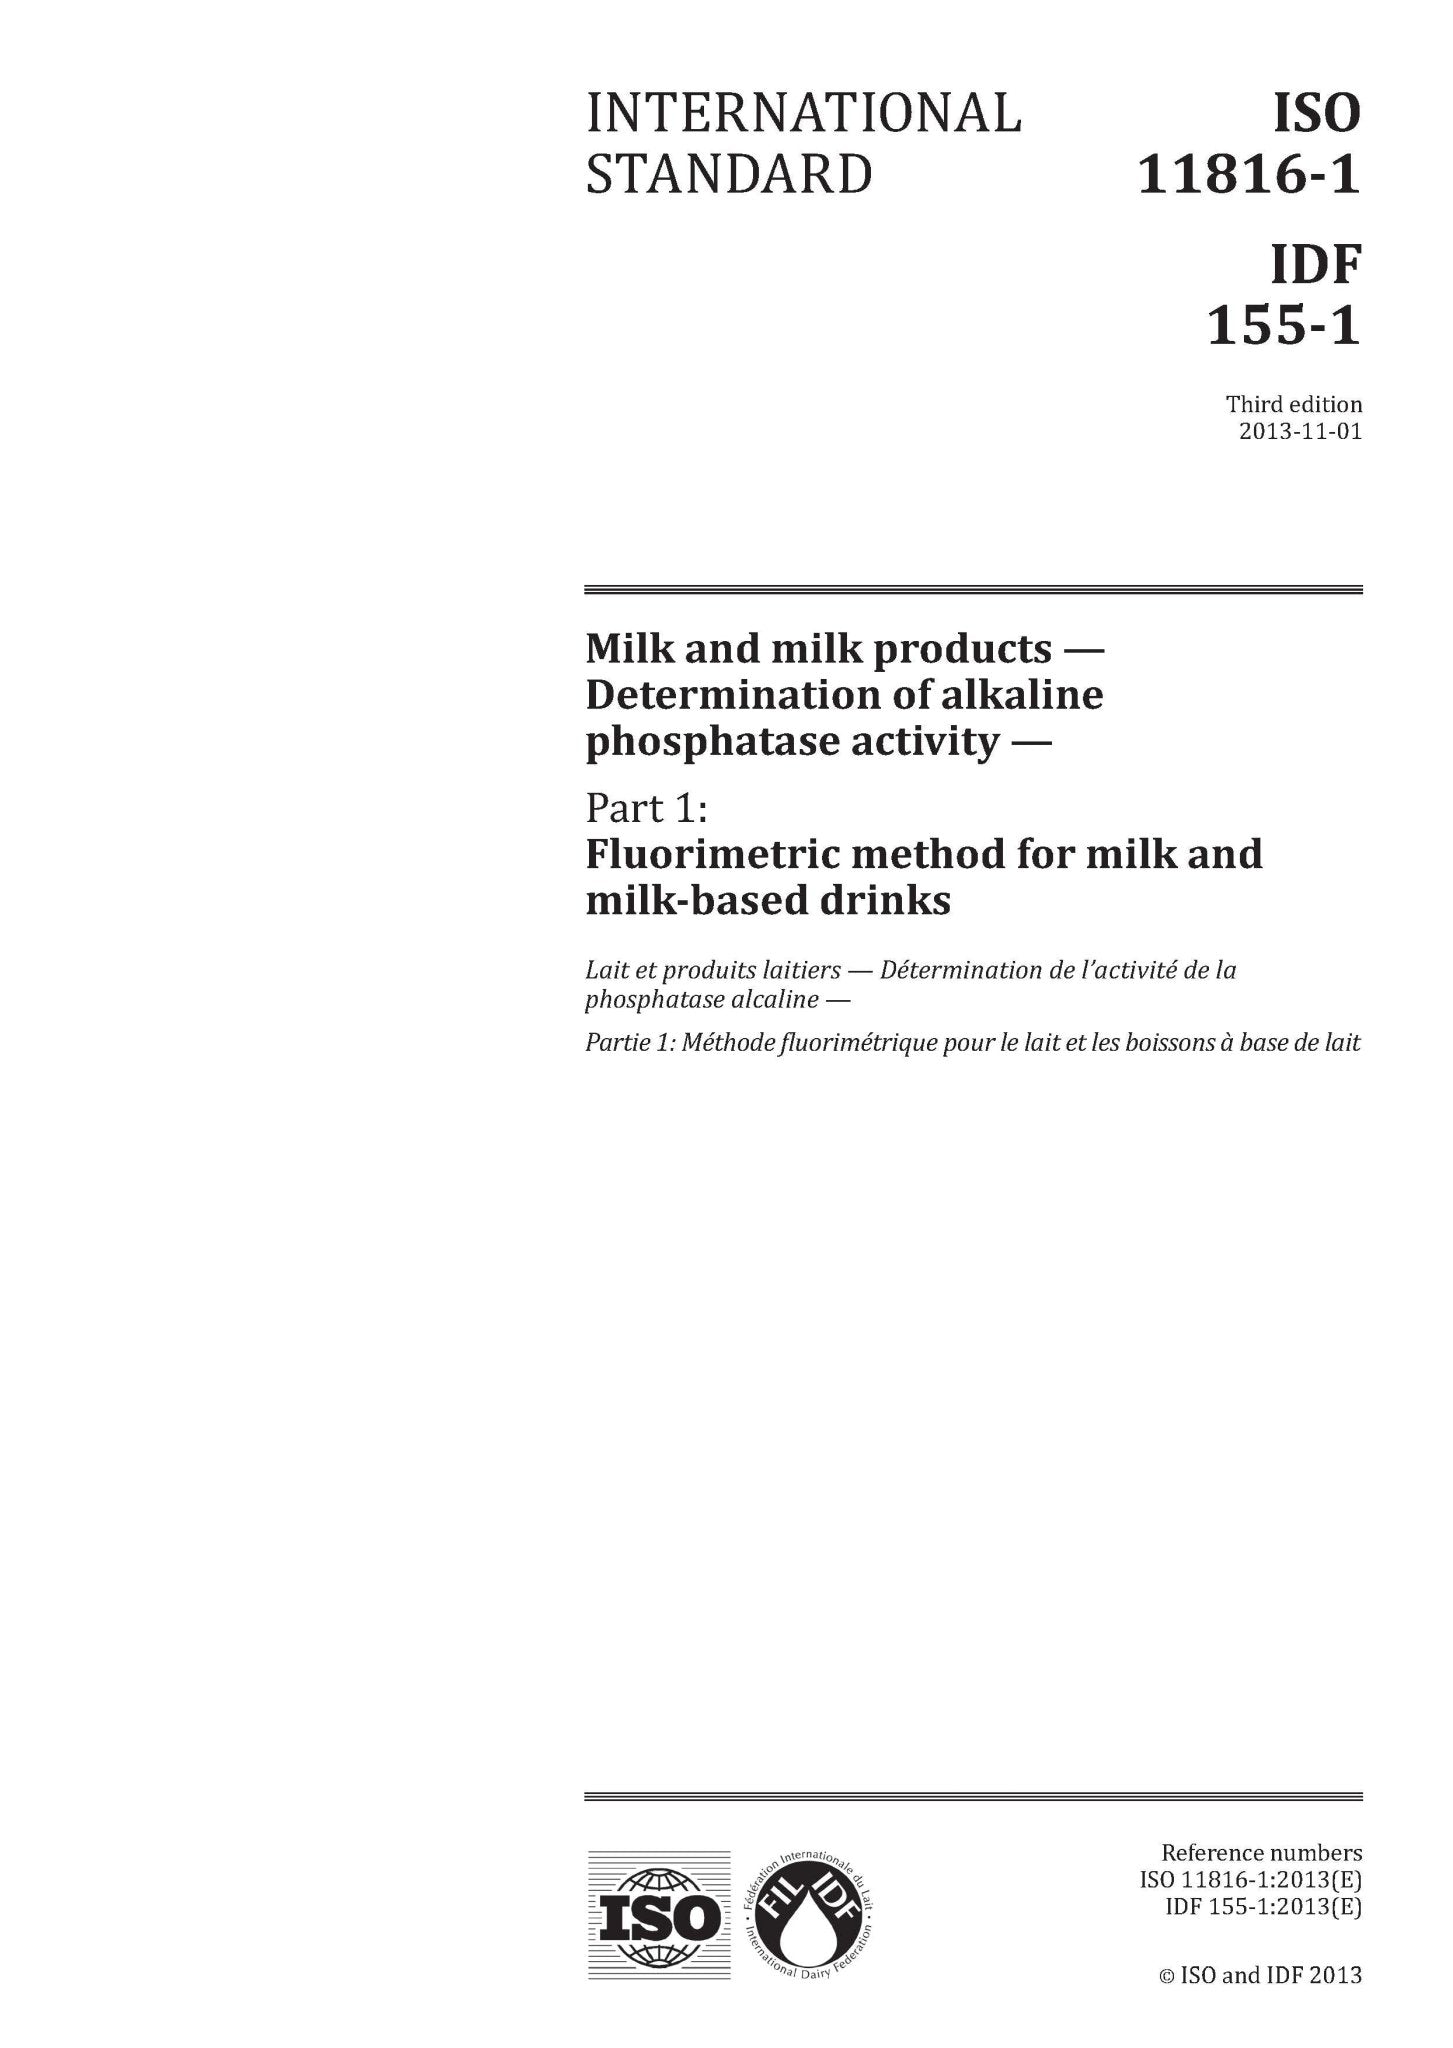 ISO 11816-1 | IDF 155-1: 2013 - Milk and milk products - Determination of alkaline phosphatase activity - Part 1: Fluorimetric method for milk and milk-based drinks - FIL-IDF